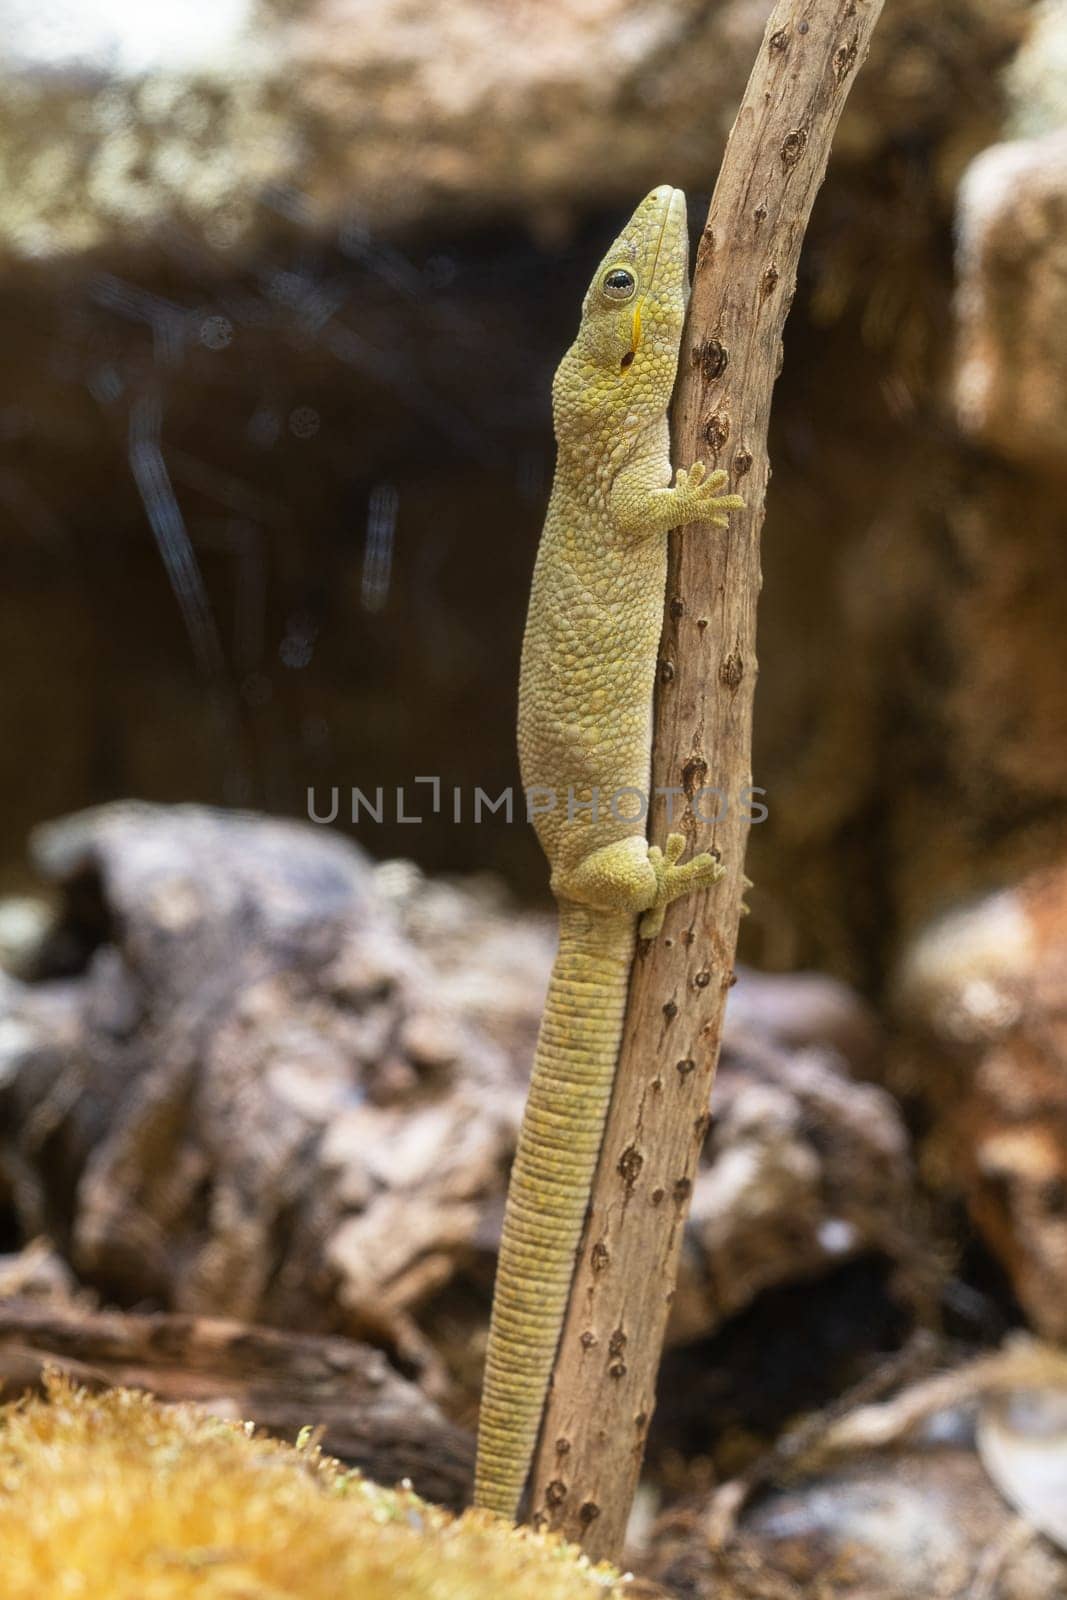 Bauers Chameleon Gecko, Eurydactylodes agricolae by alfotokunst